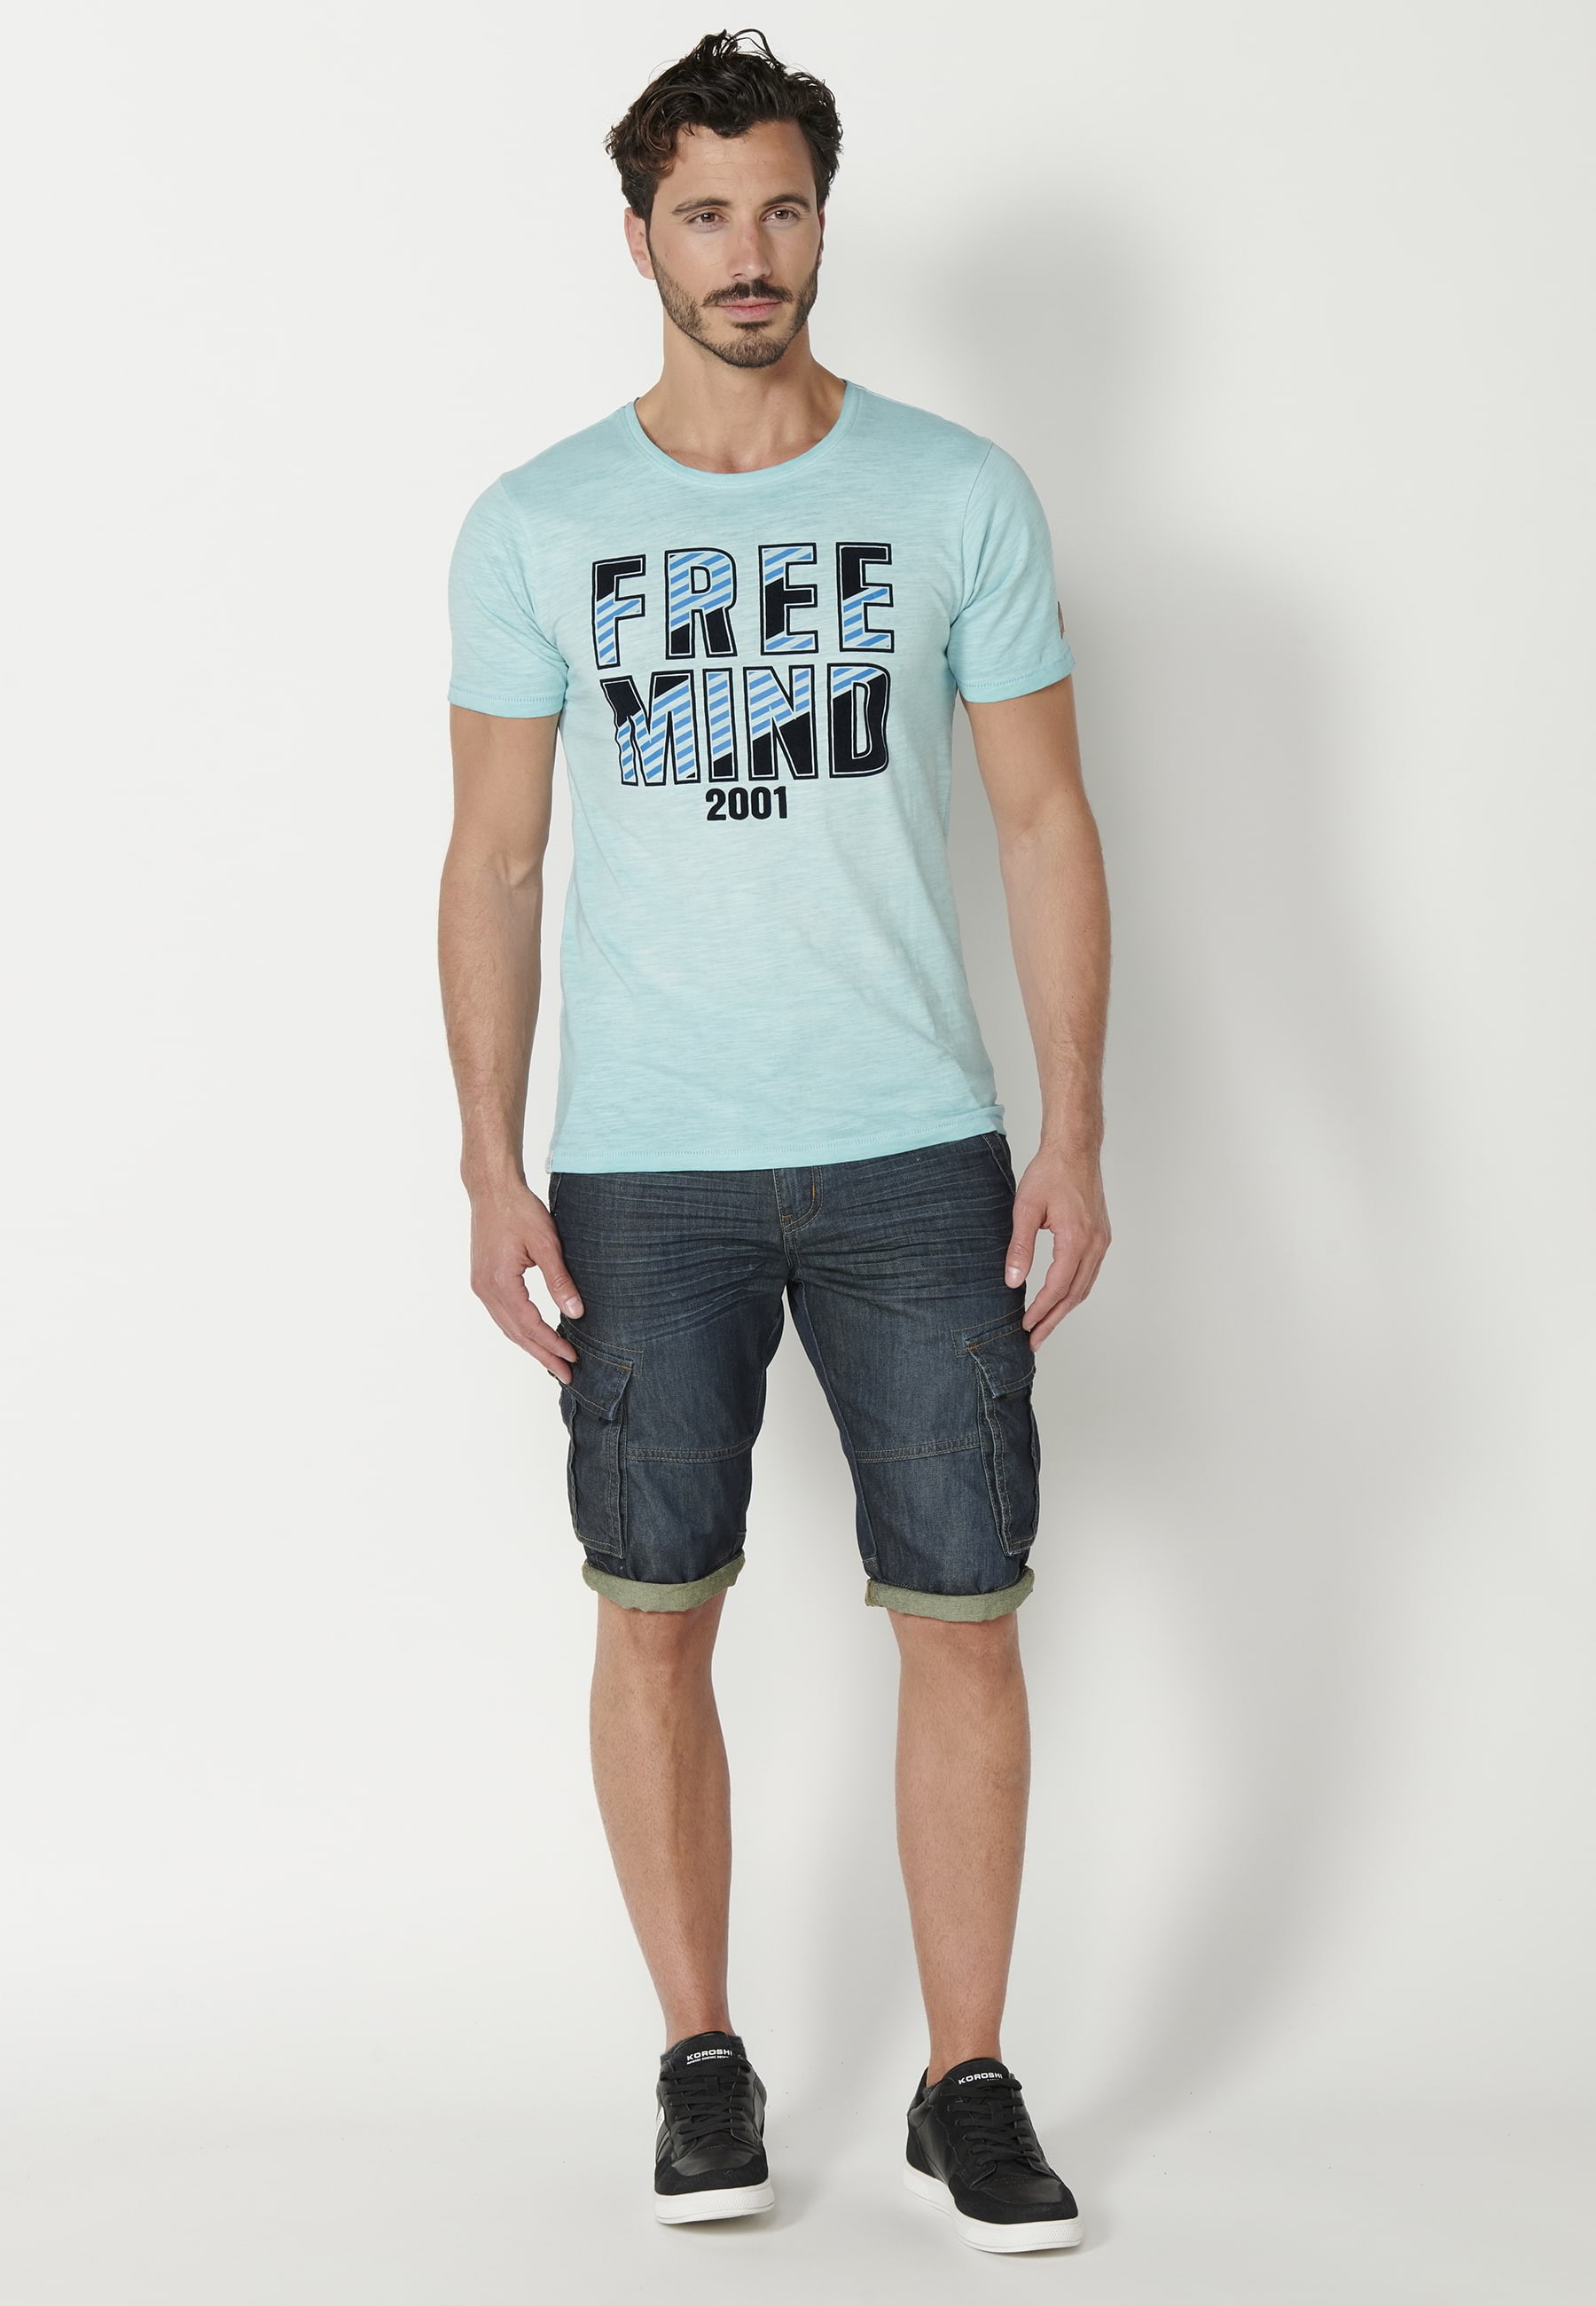 Camiseta manga corta de Algodón color Azul para Hombre